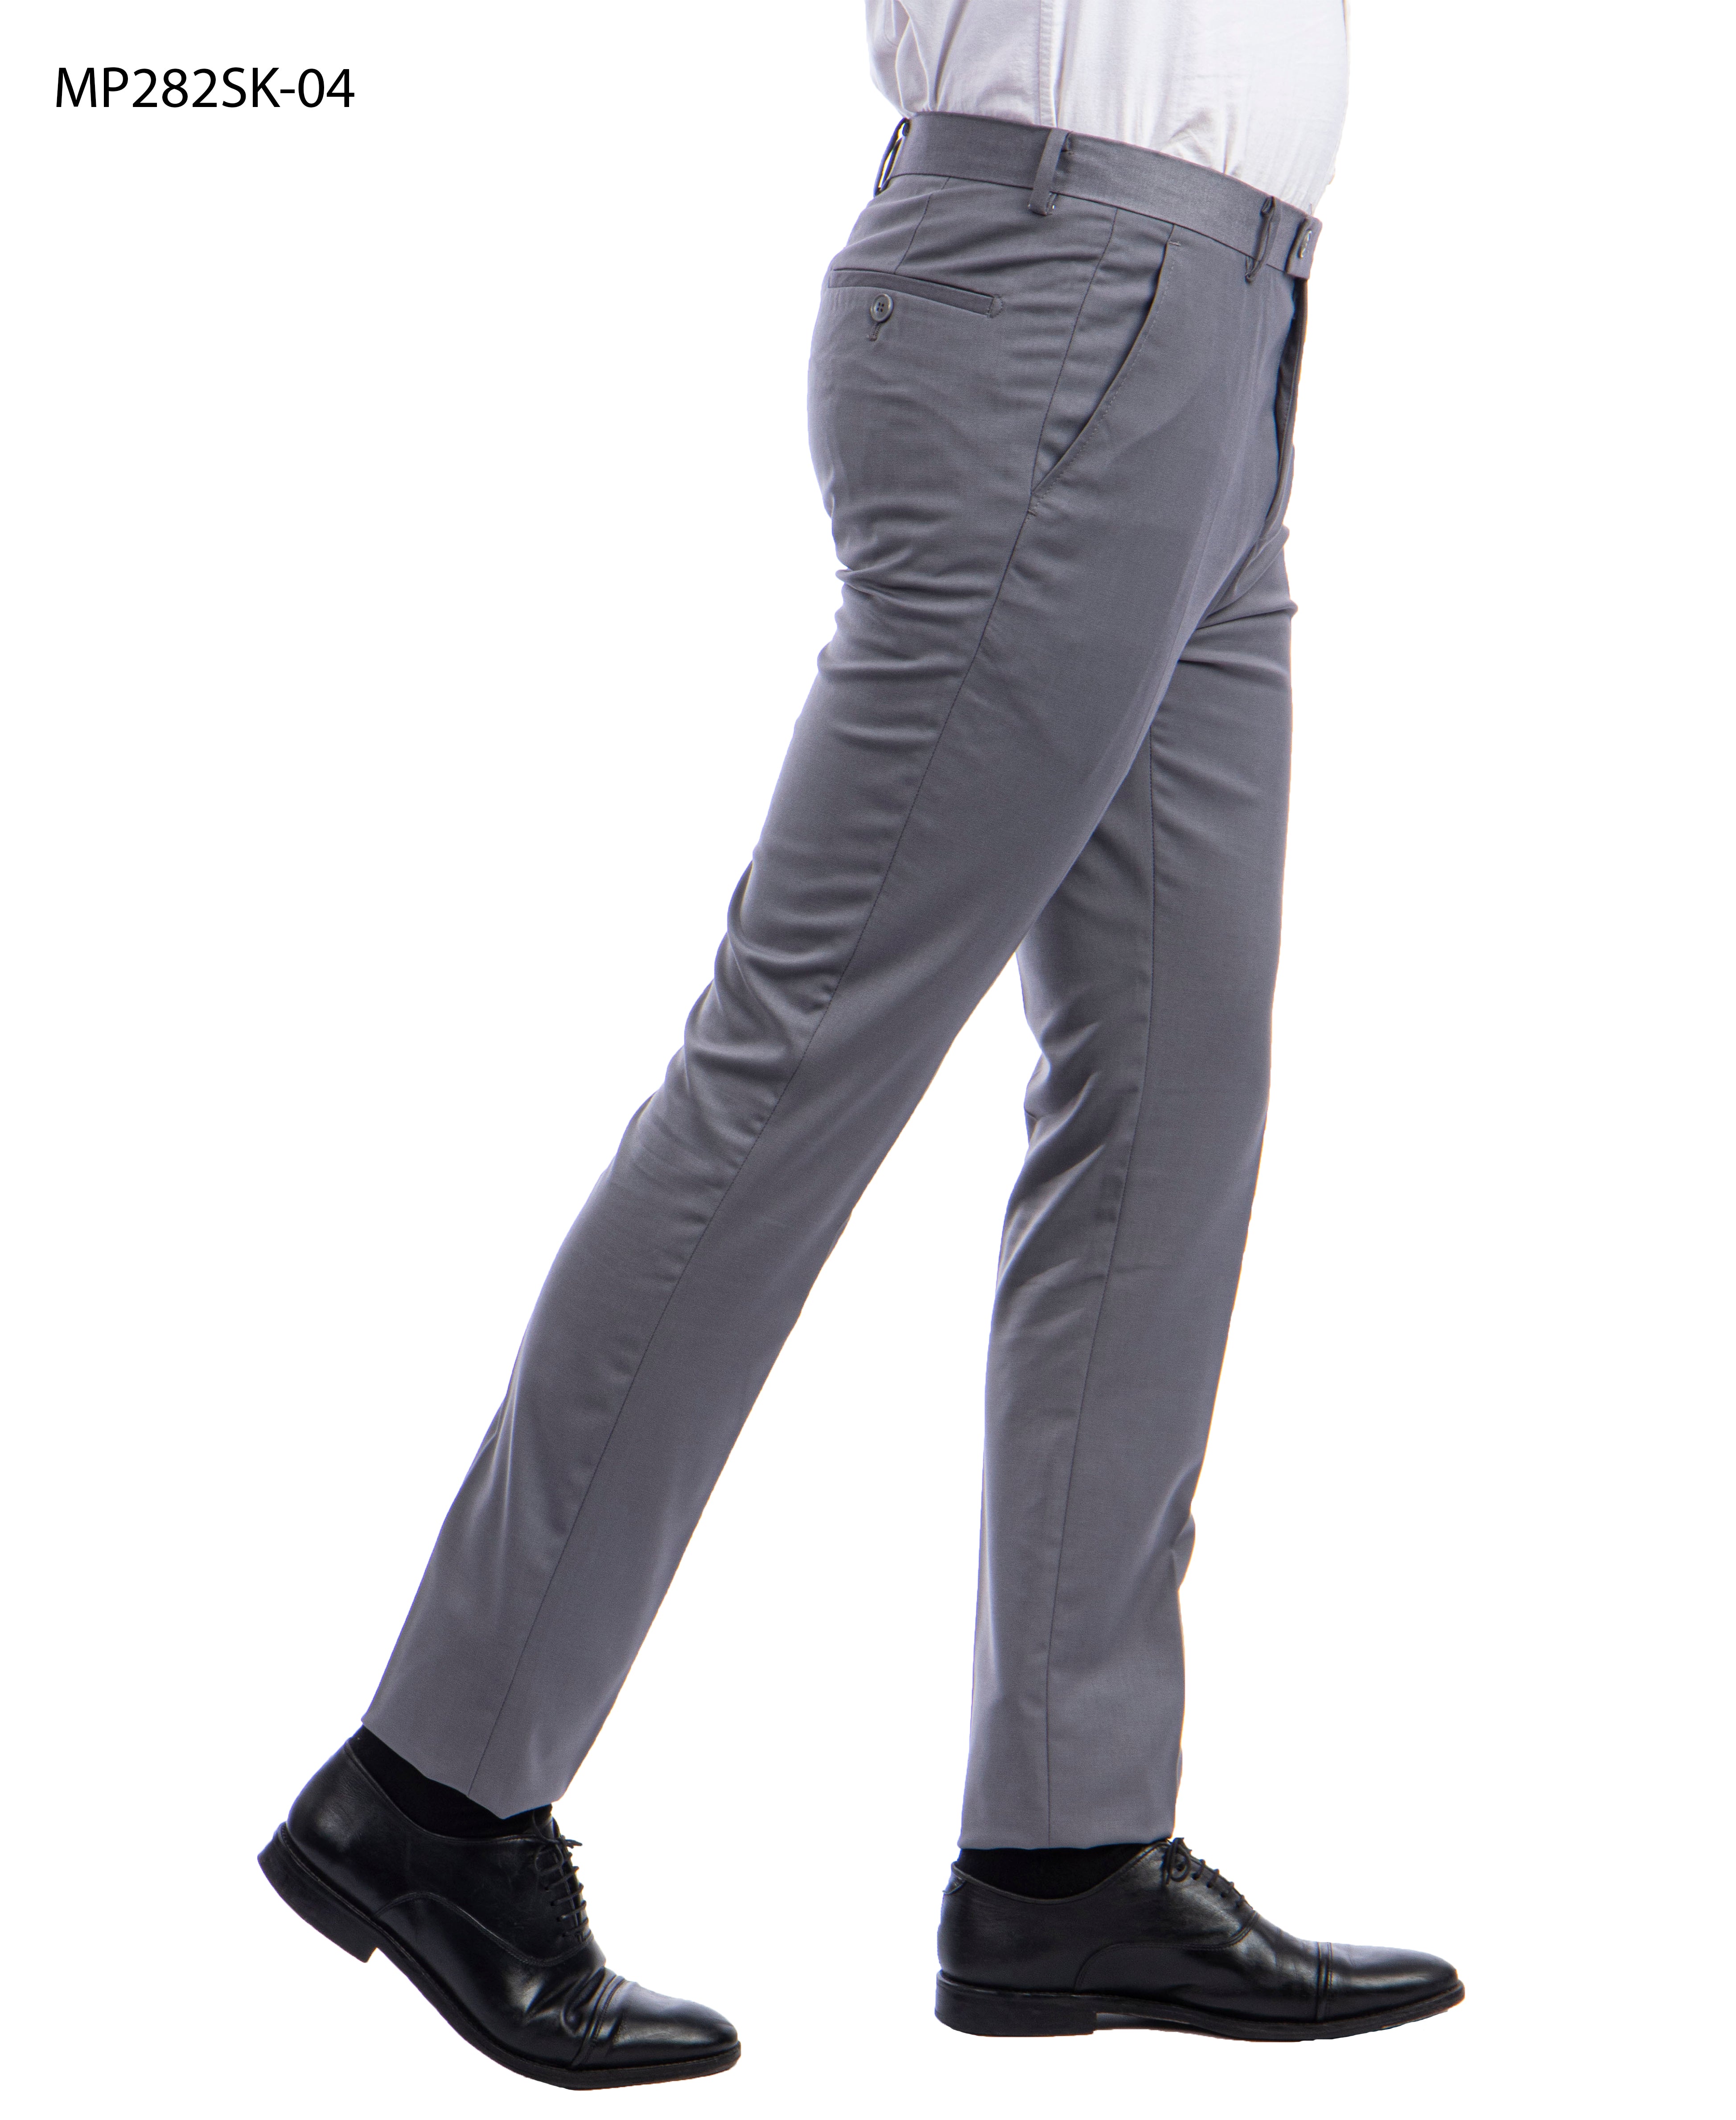 Performance pants slate grey